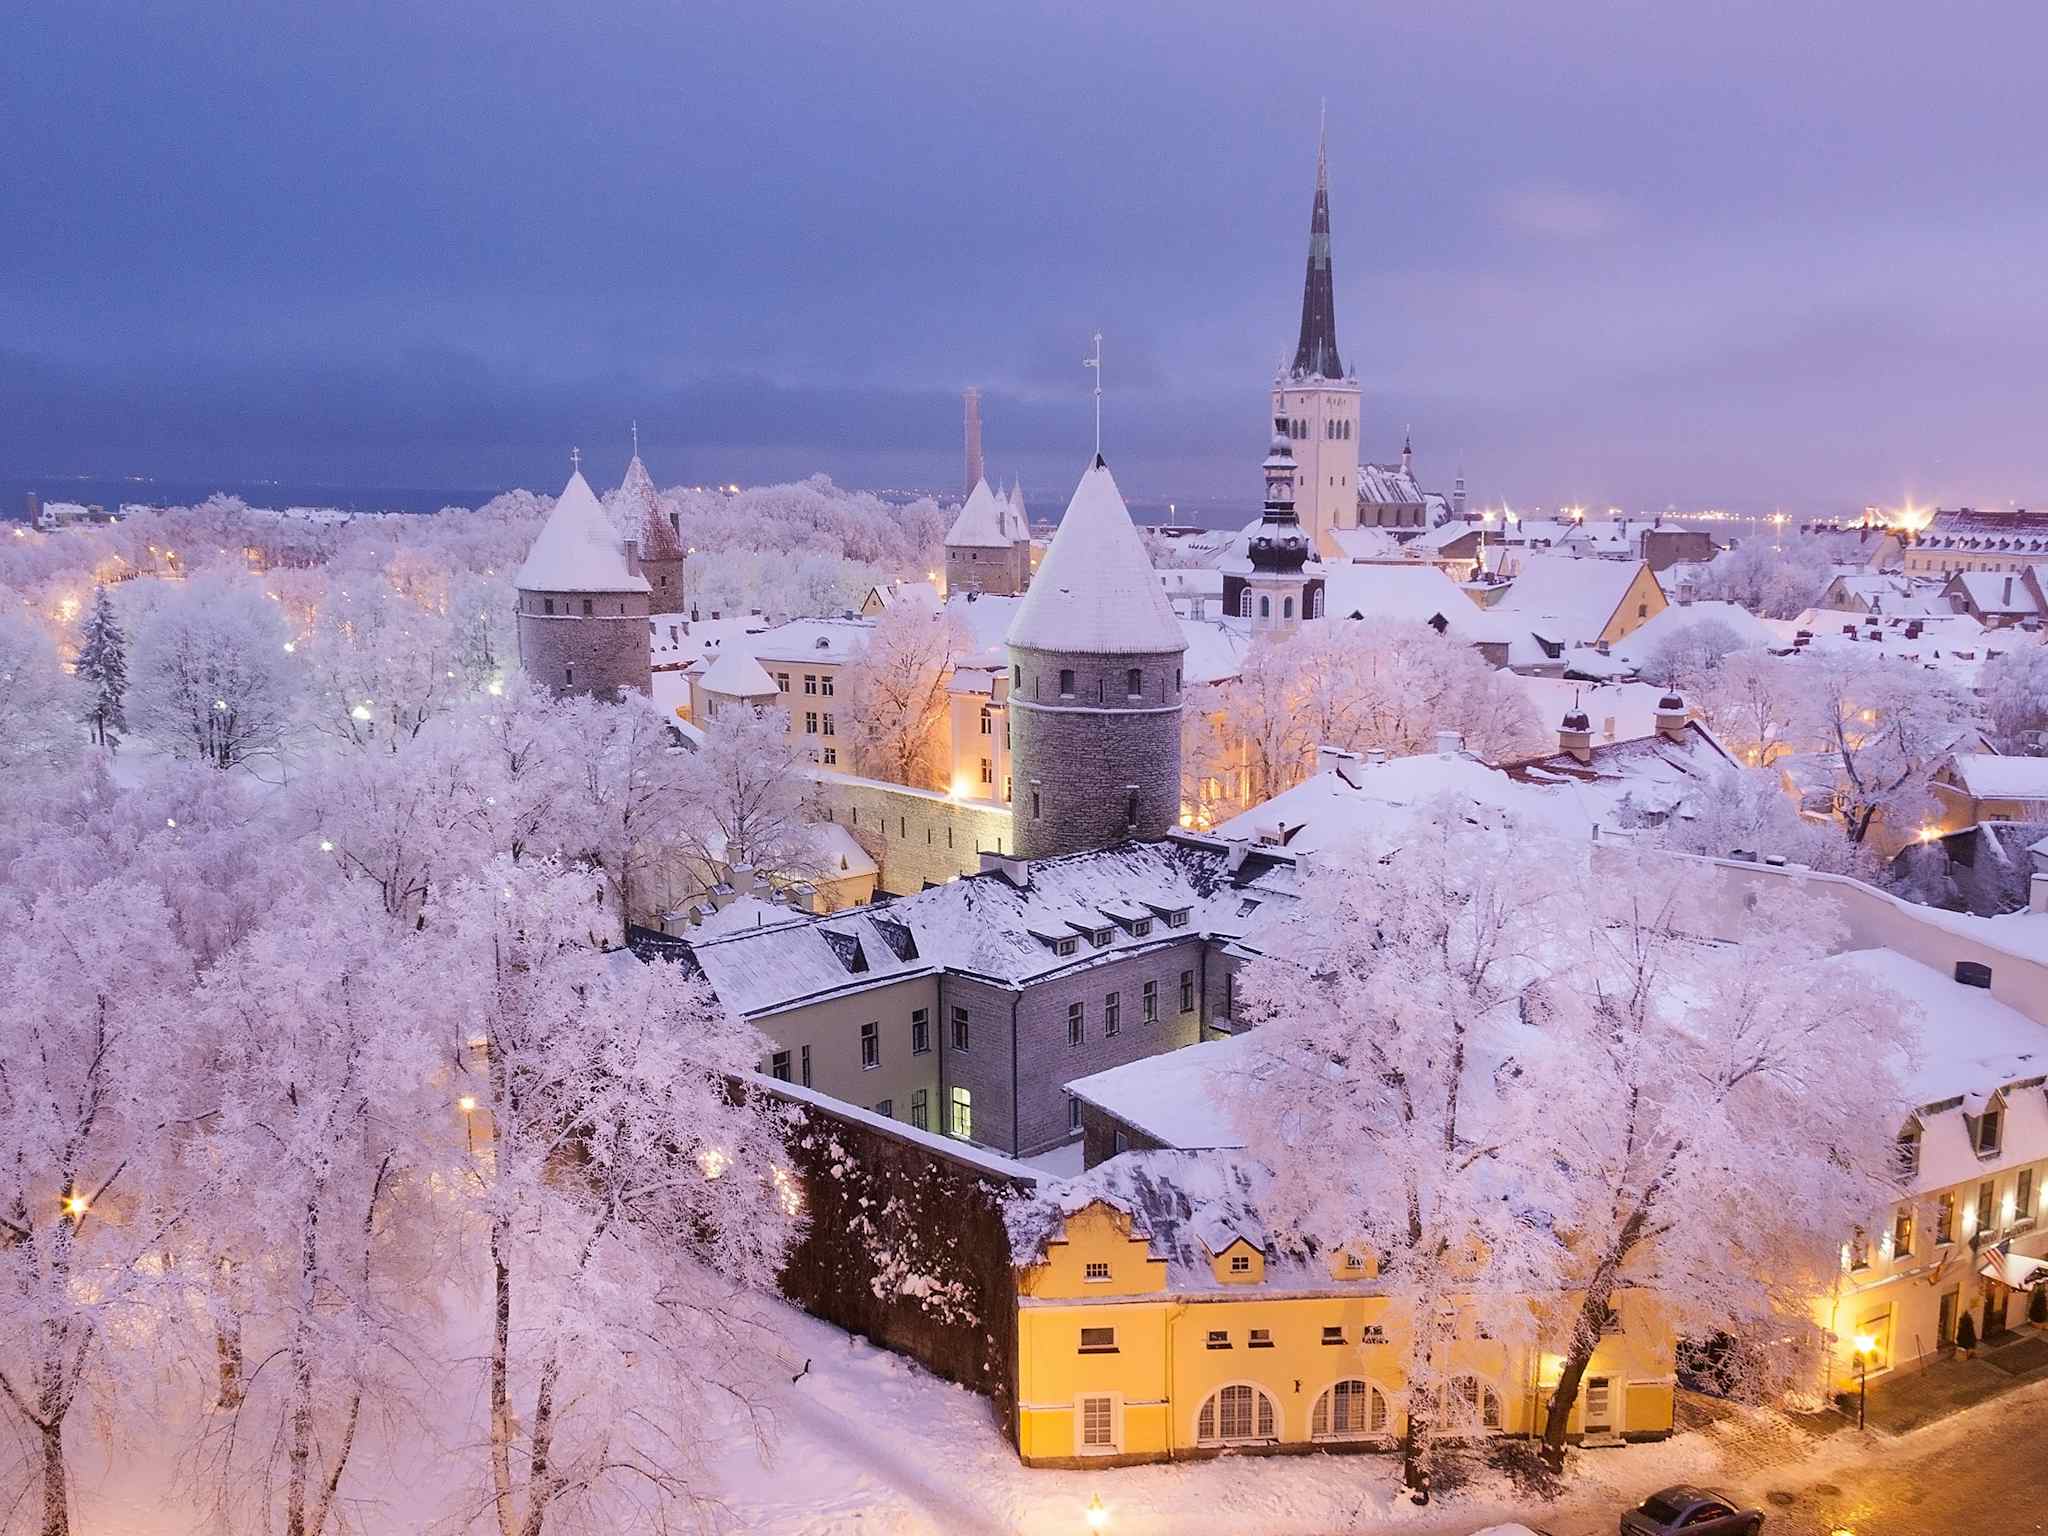 Snowy Tallinn, Estonia. Photo: tourism board